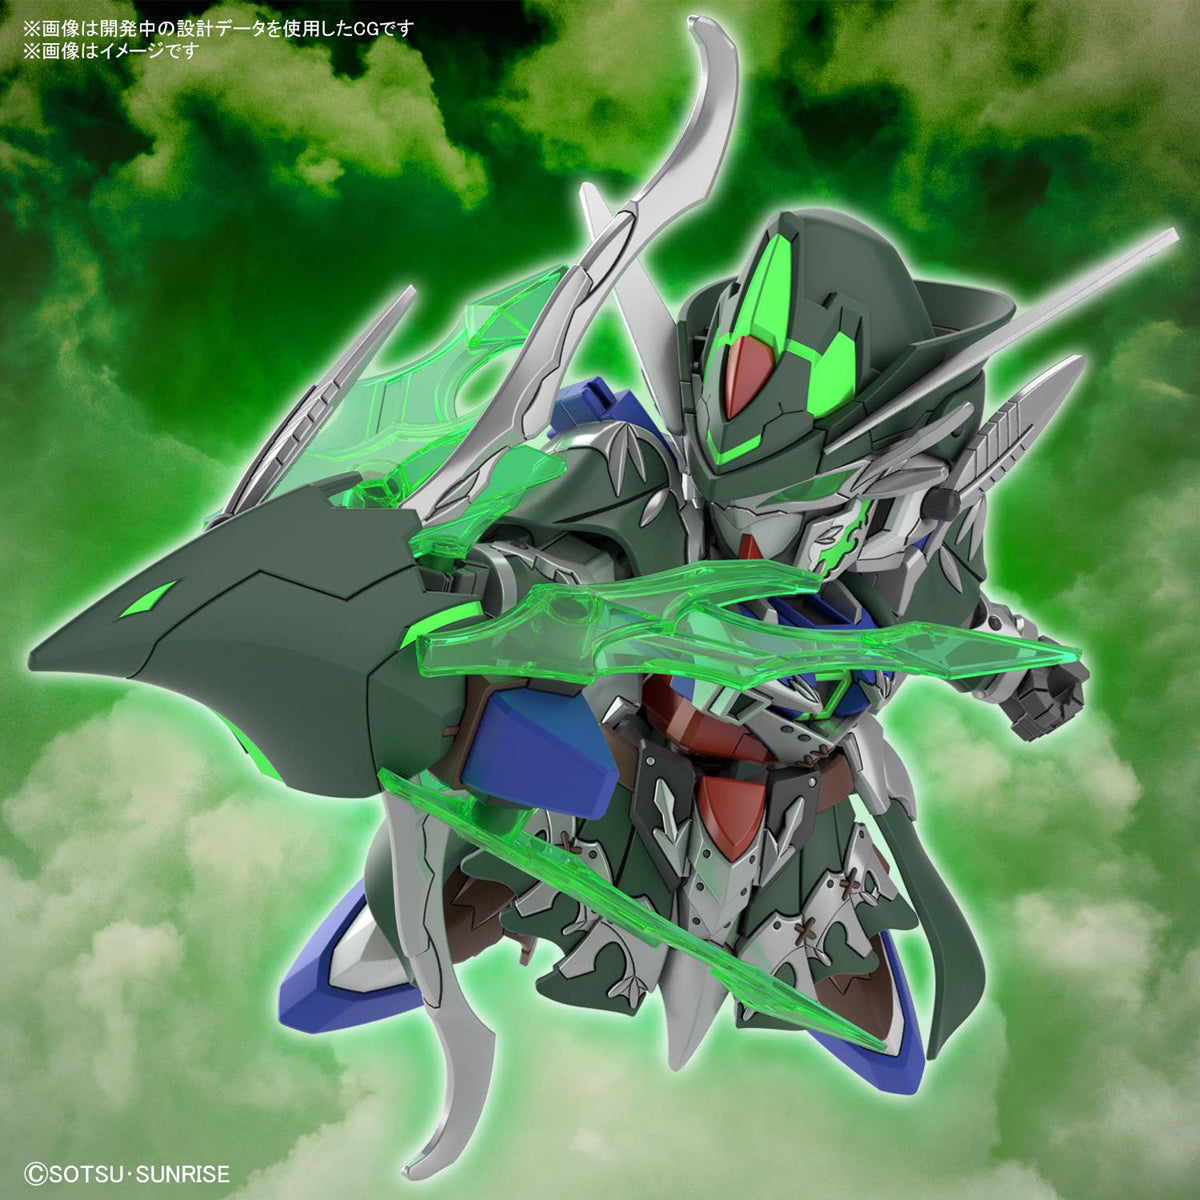 SD World Heroes - Robin Hood Gundam AGE-2